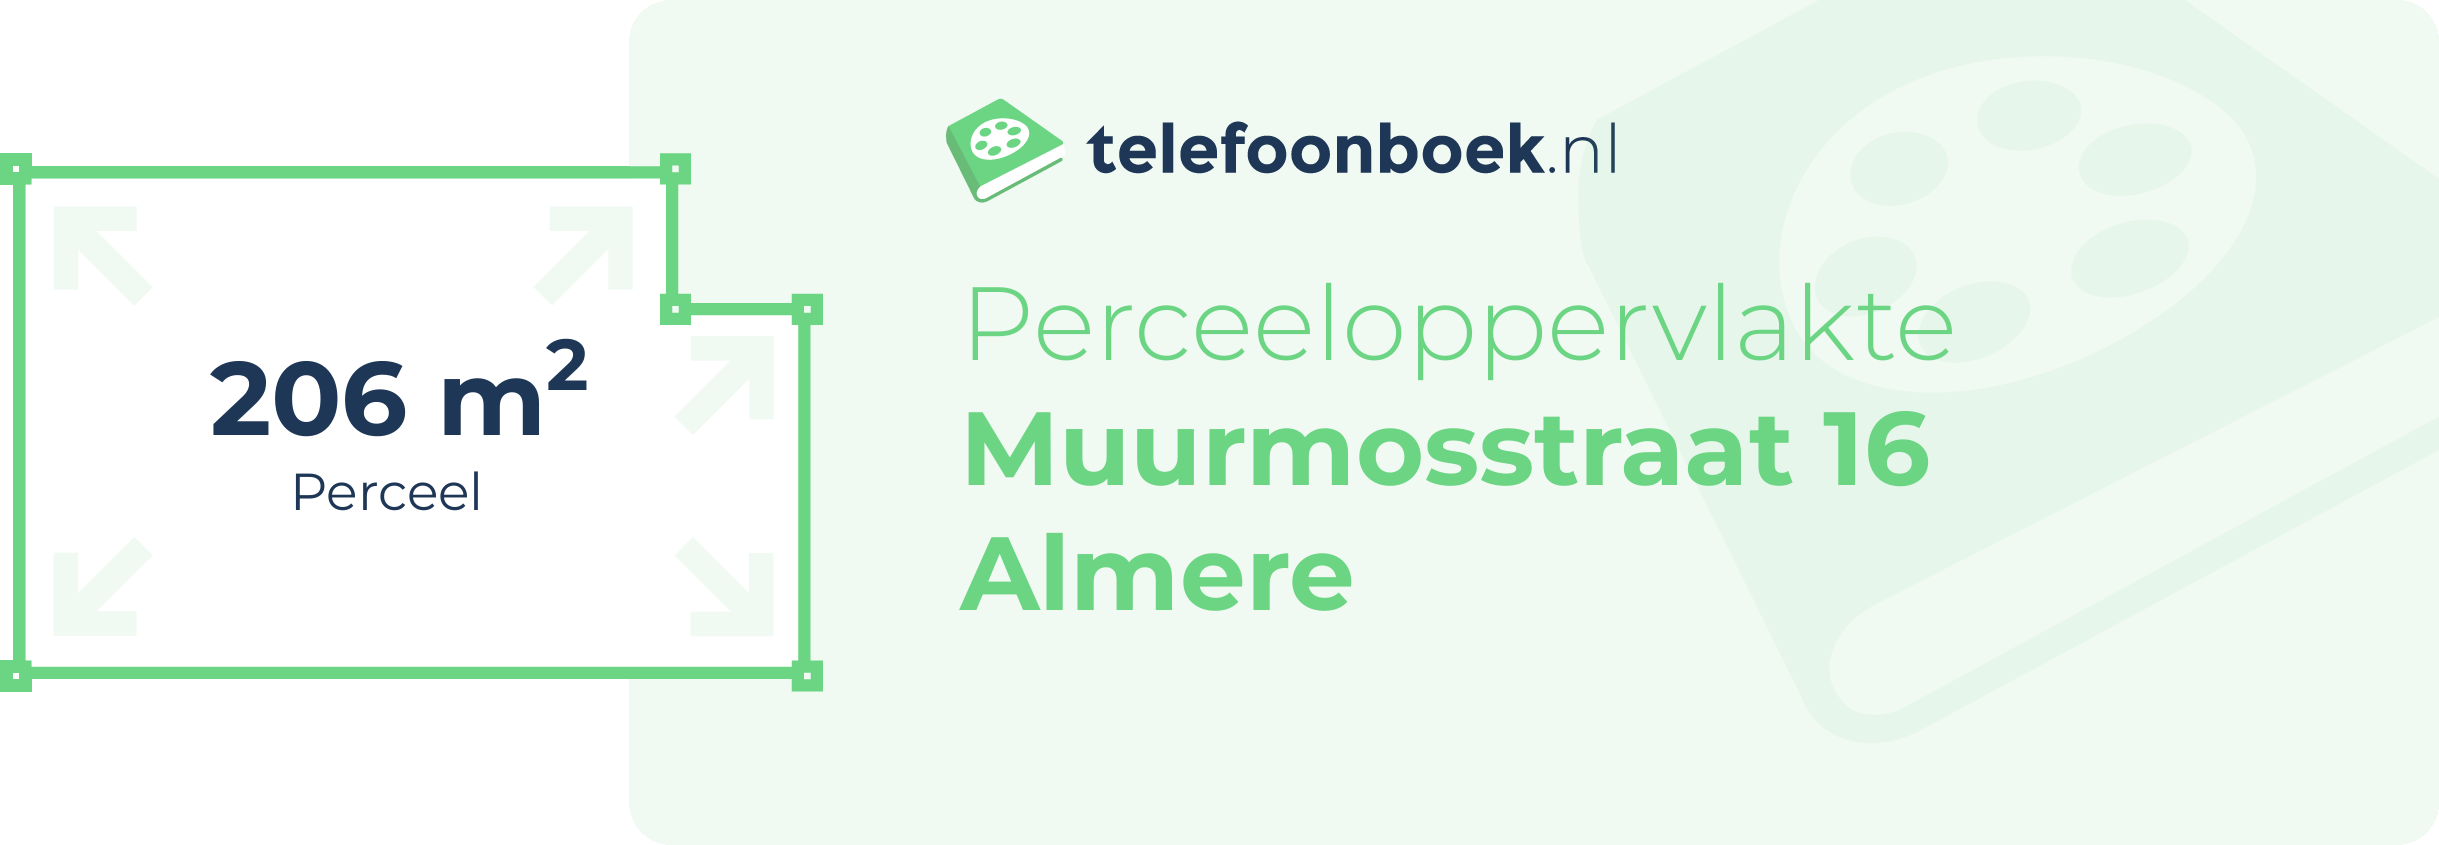 Perceeloppervlakte Muurmosstraat 16 Almere